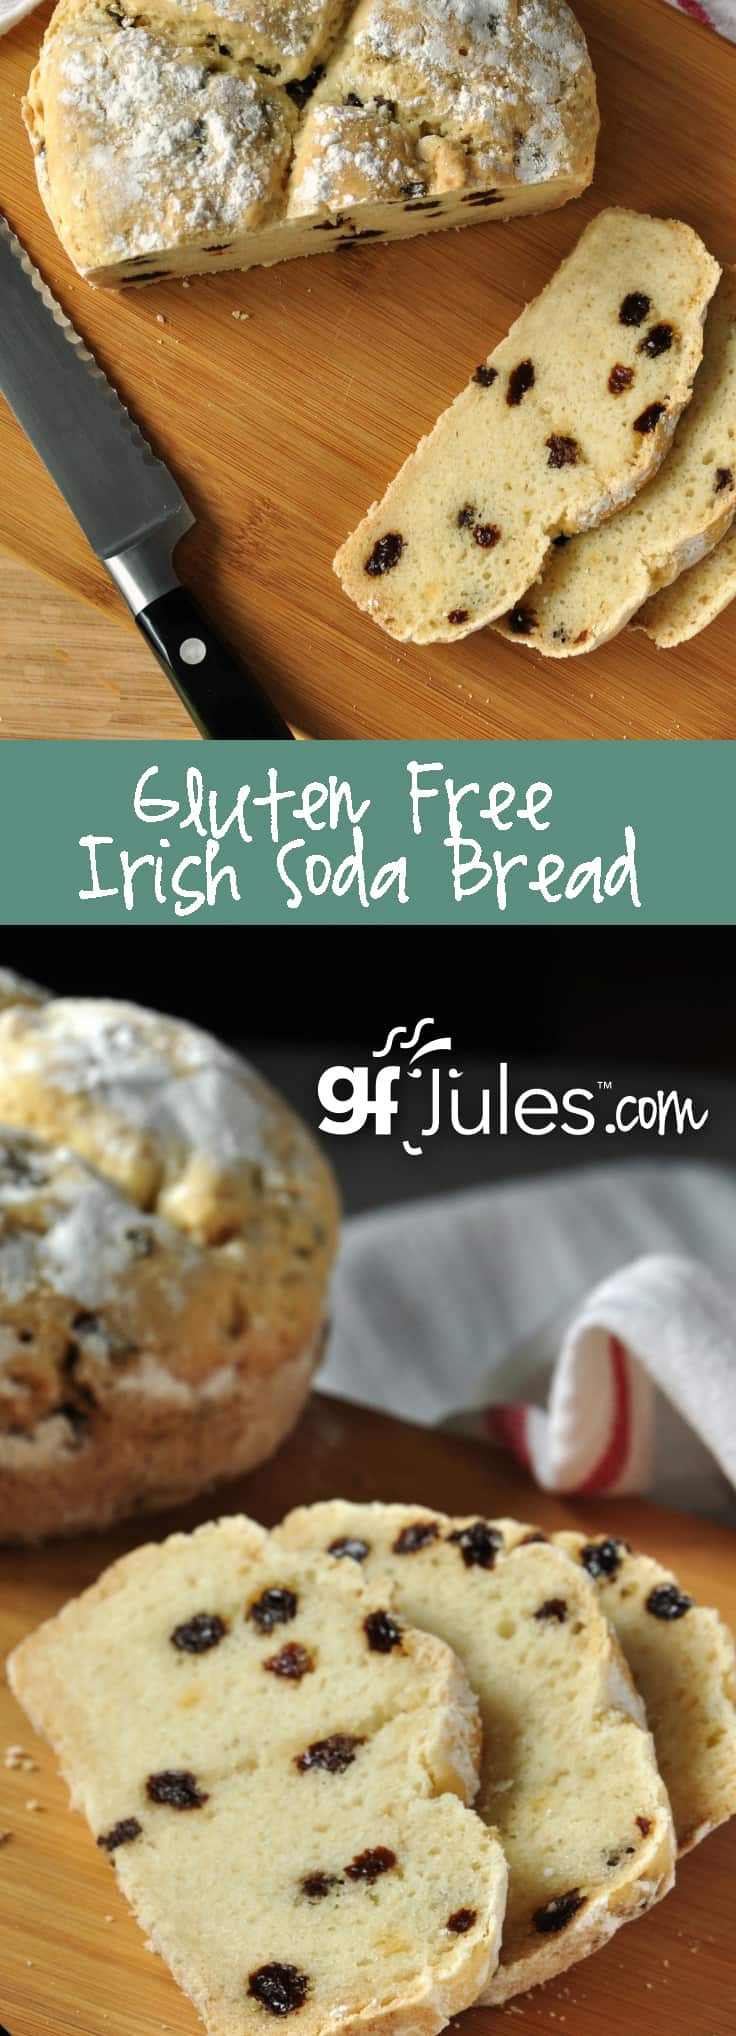 Gluten Free Soda Bread
 Easy Gluten Free Irish Soda Bread Gluten free recipes